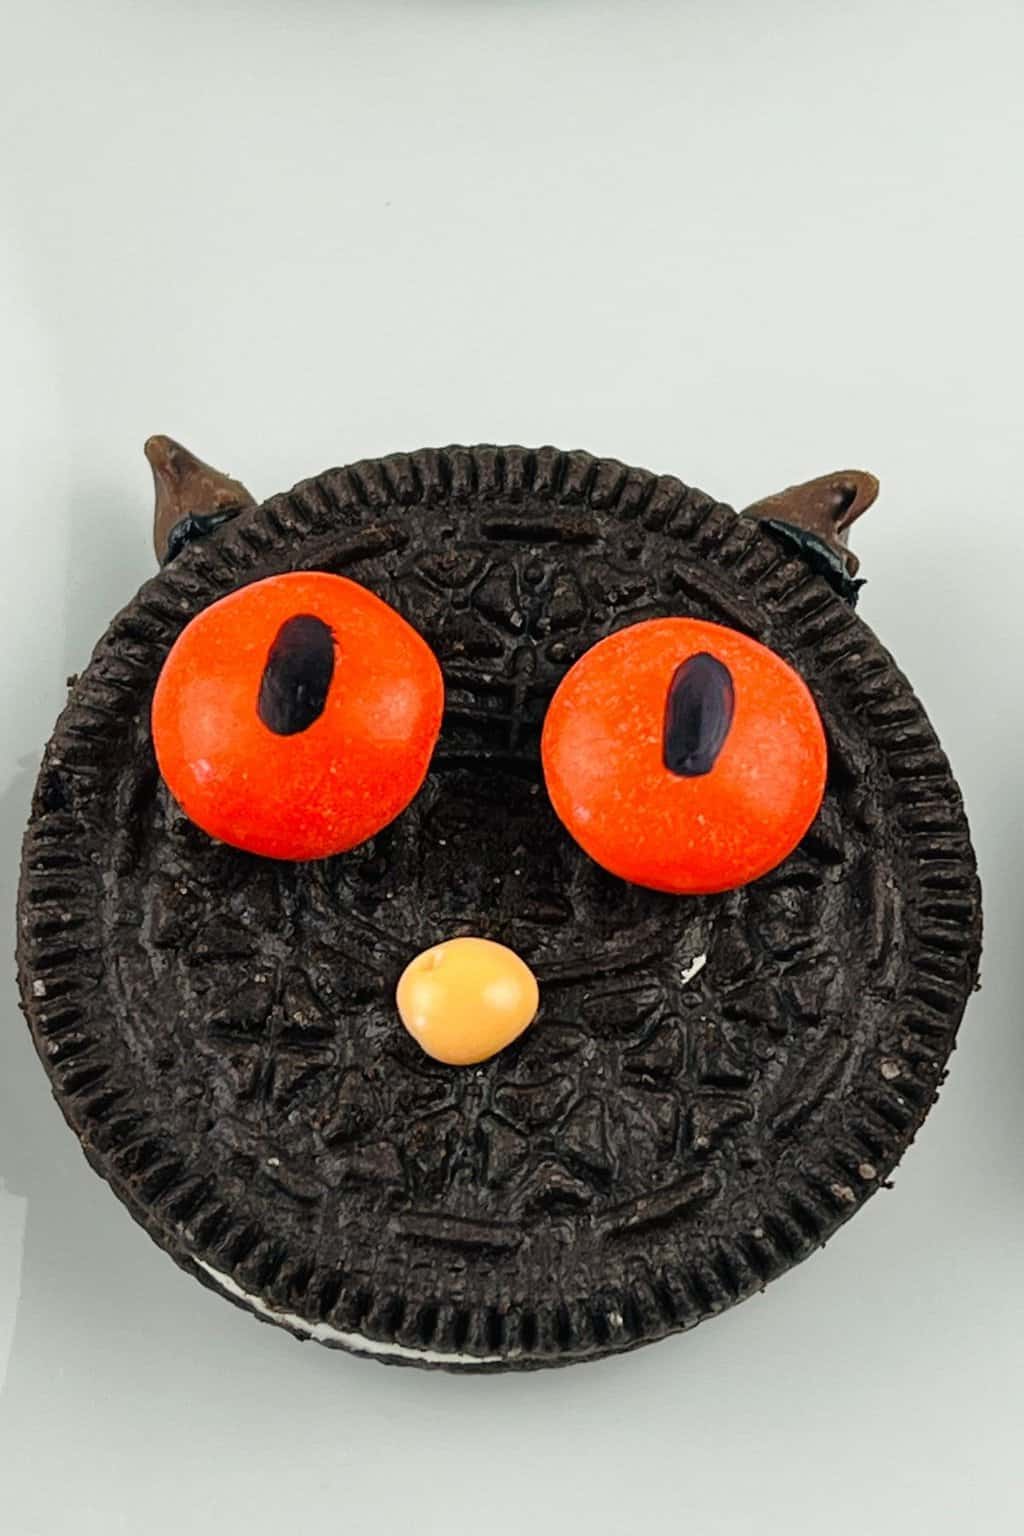 Oreo cat cookie for Halloween with orange eyes.